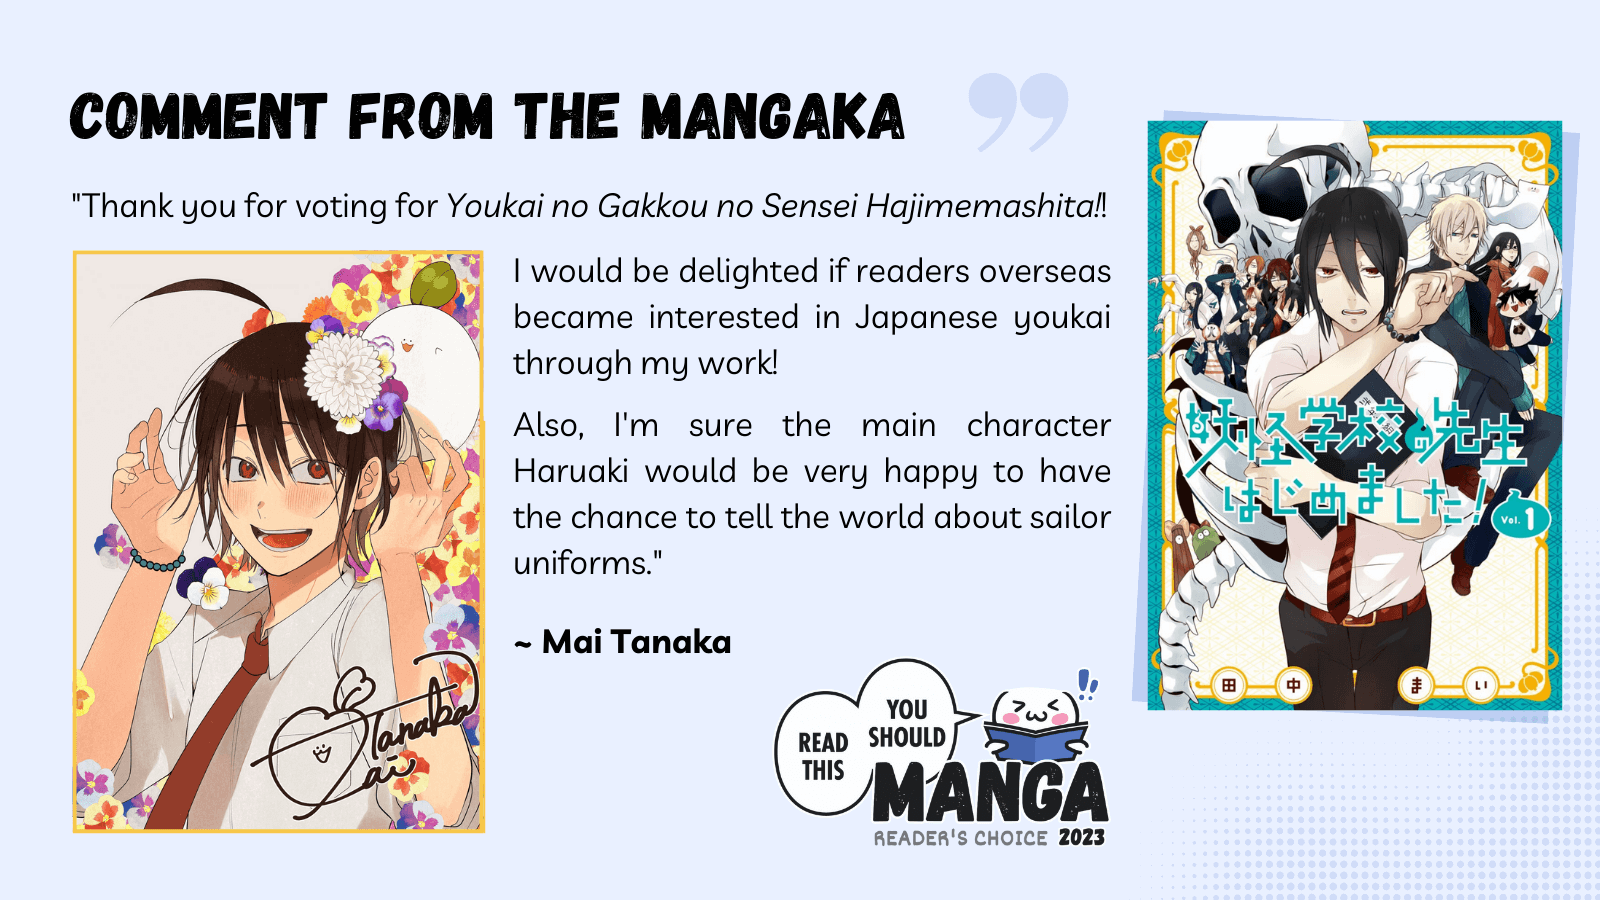 Comment from the mangaka of Youkai Gakkou no Sensei Hajimemashita!